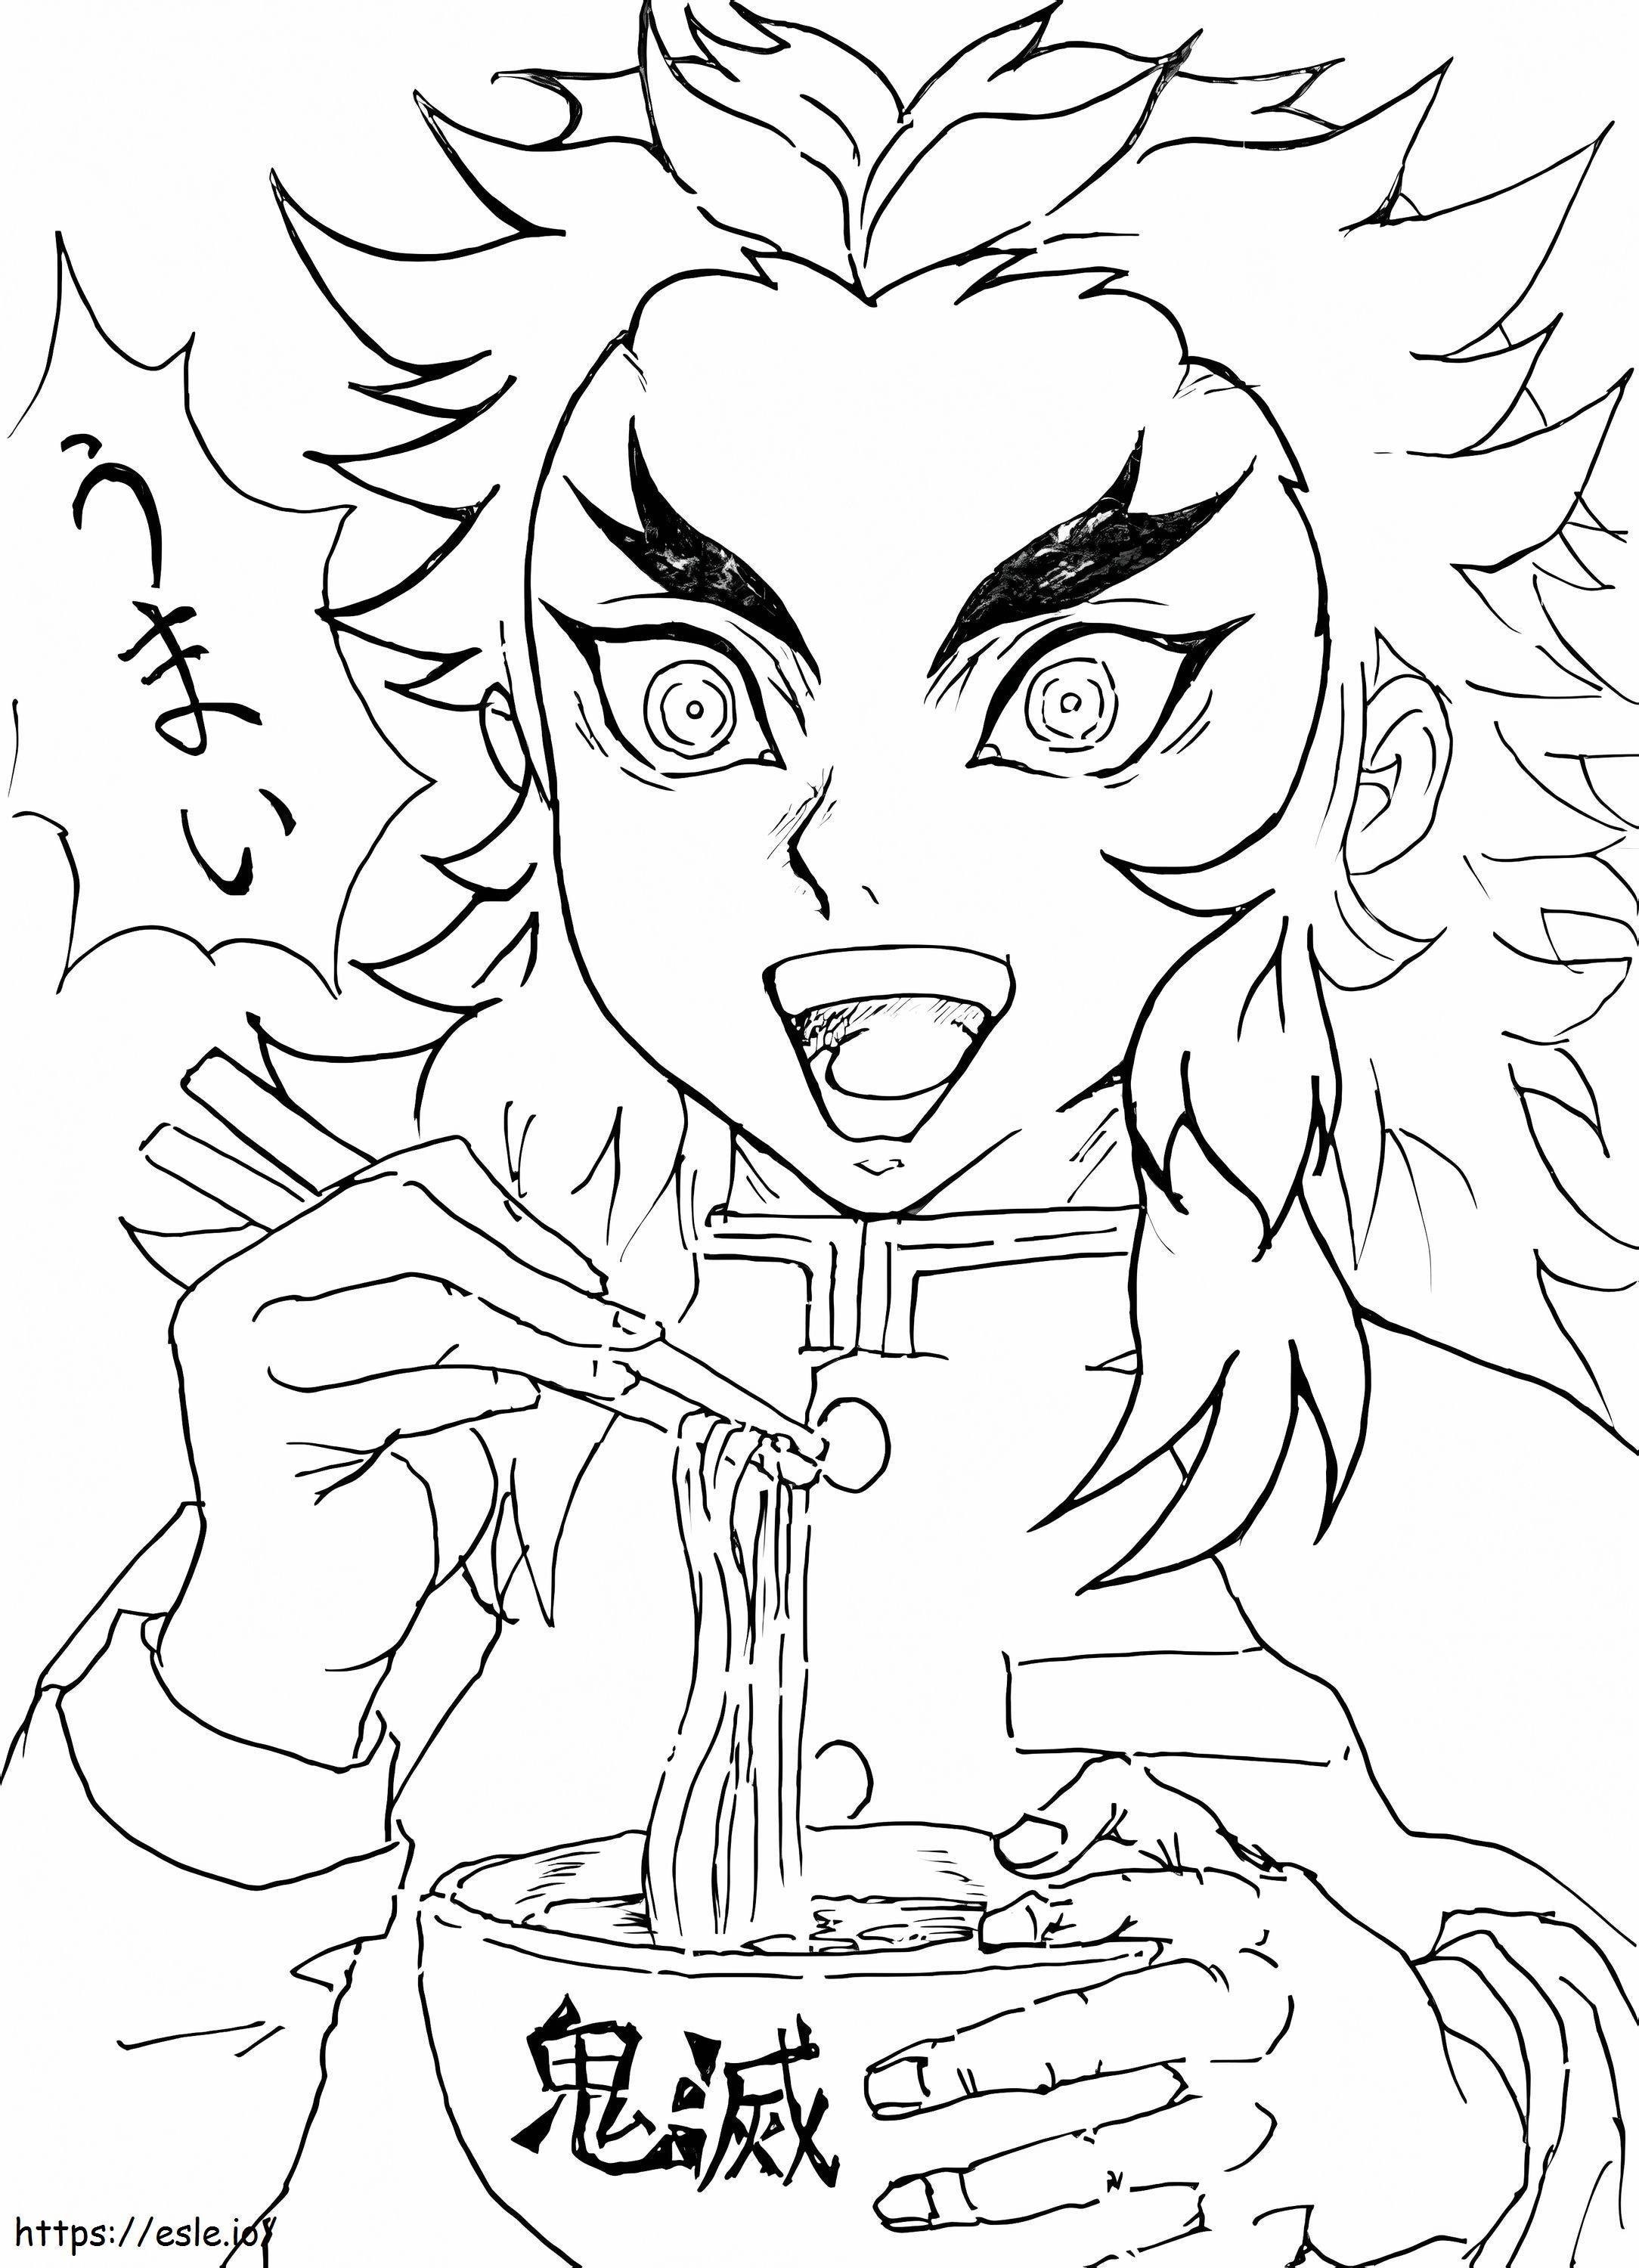 Hungry Kyojuro Rengoku coloring page